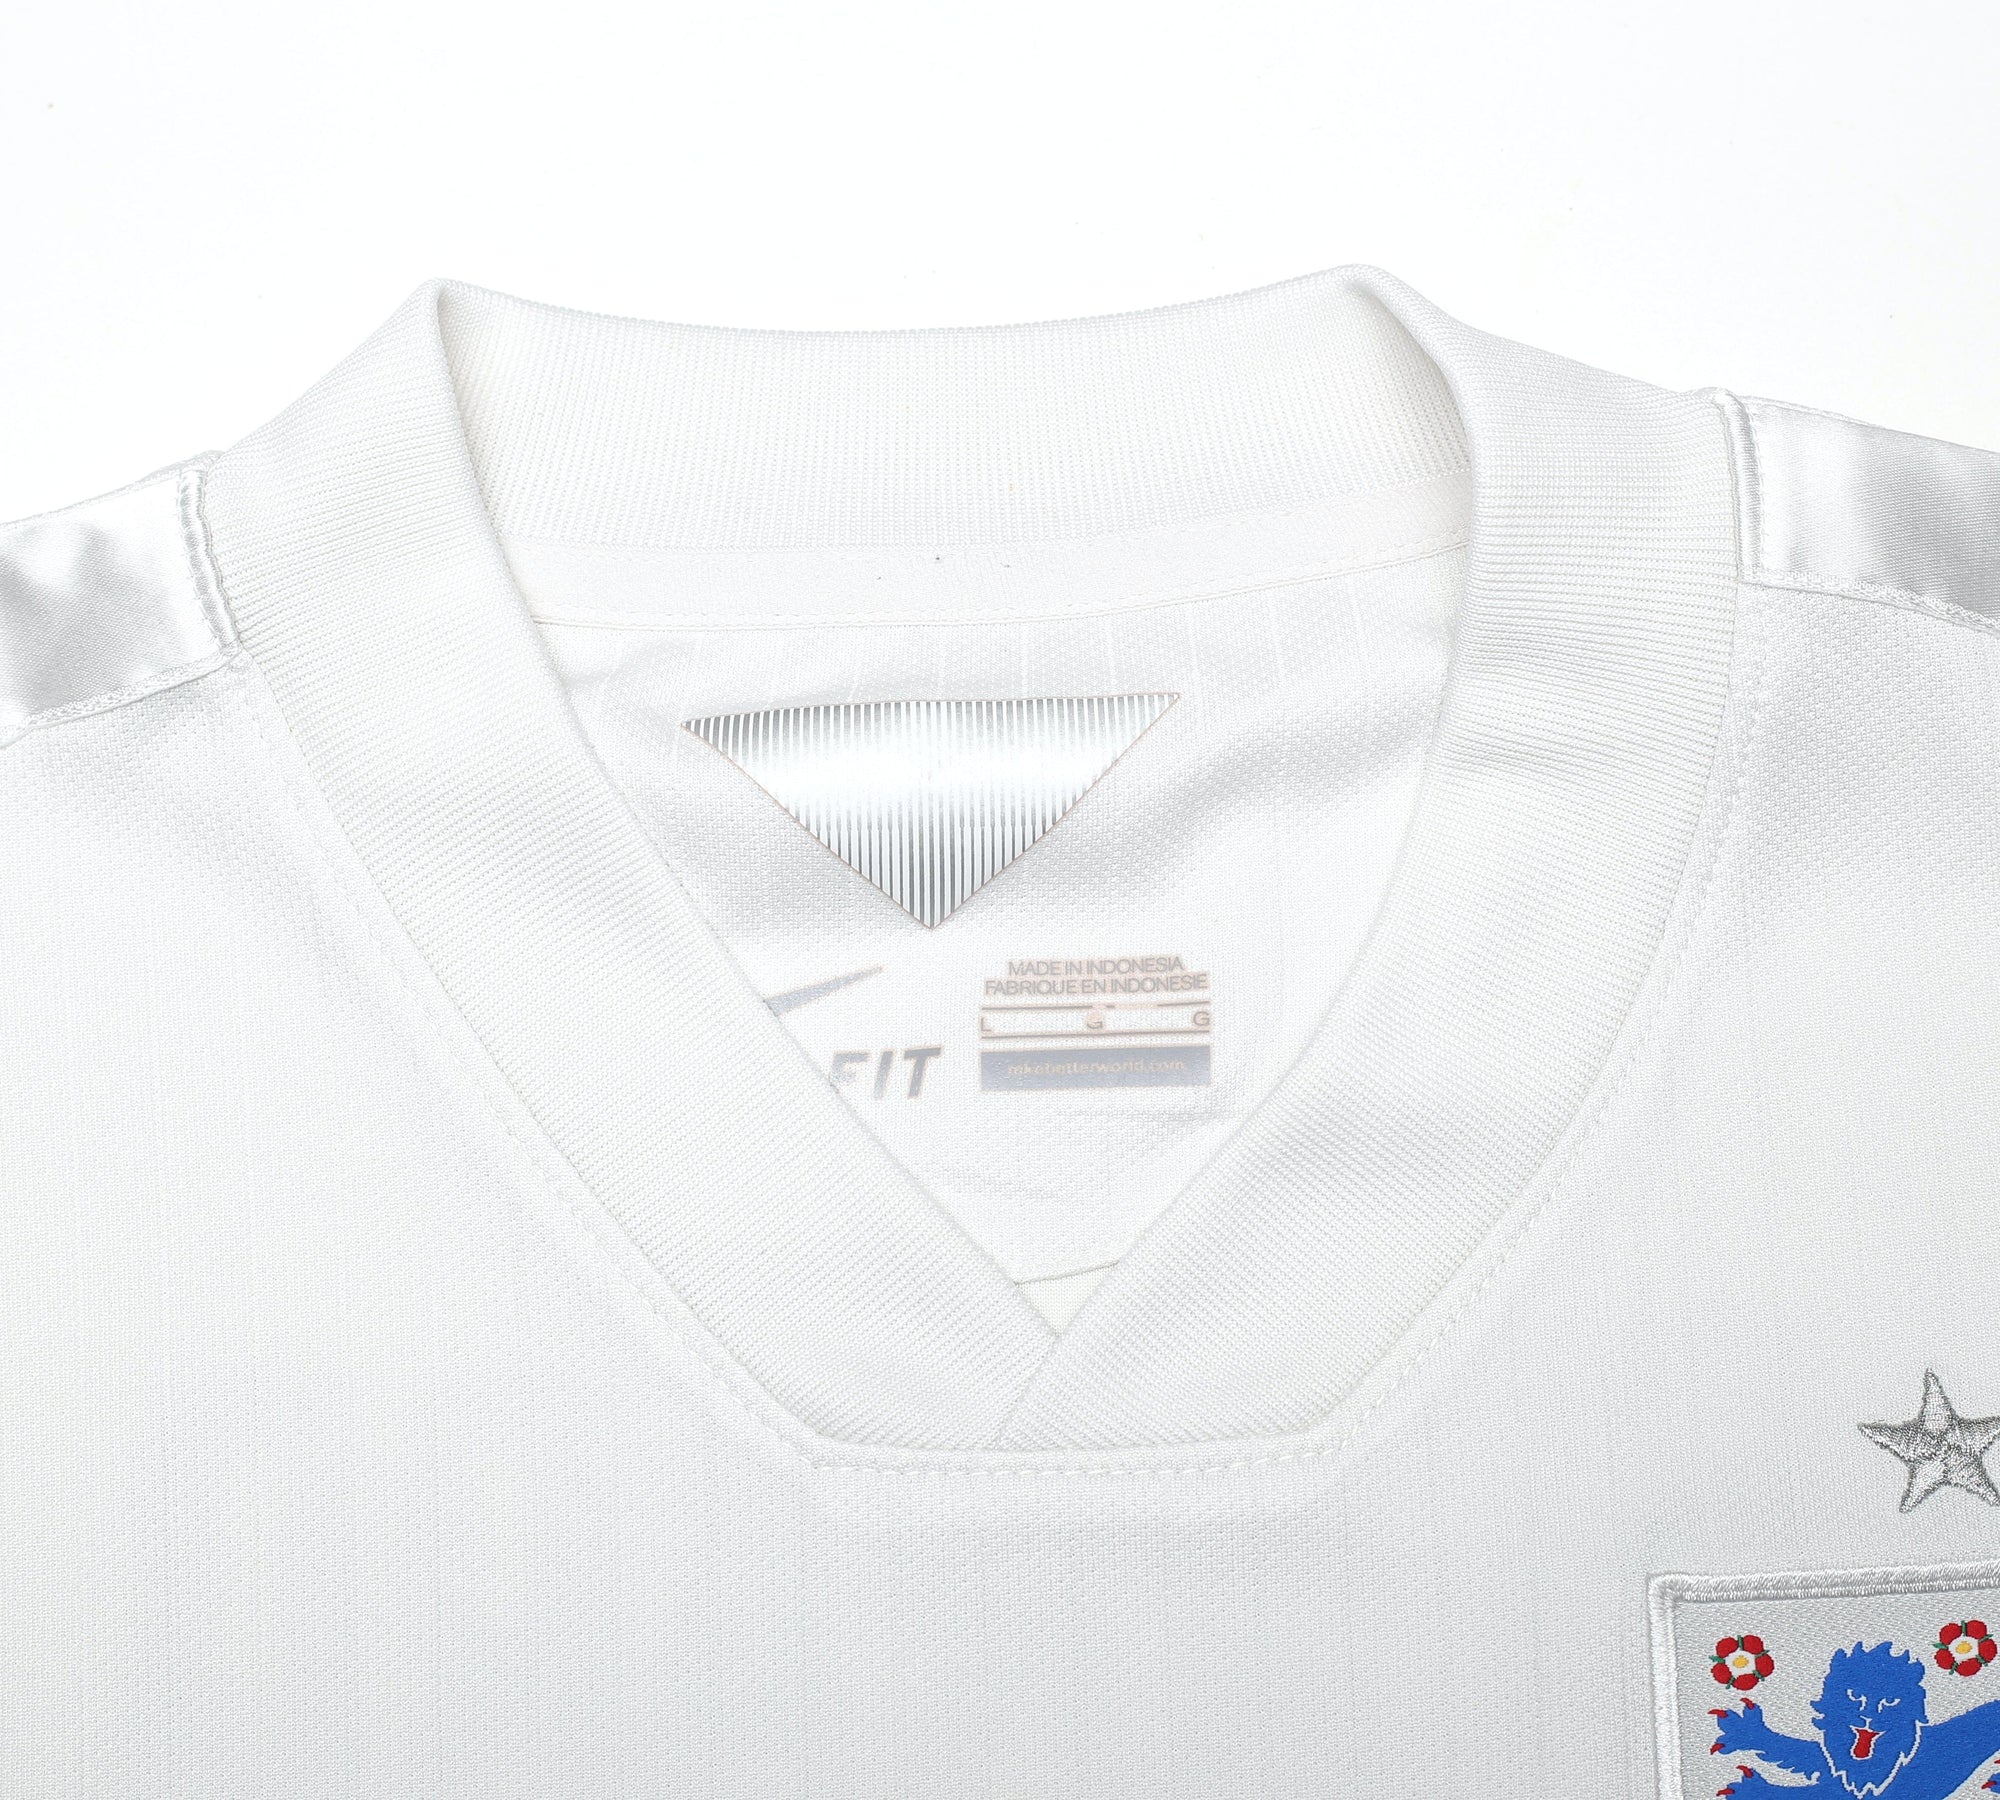 2014/15 GERRARD #4 England Vintage Nike Home Football Shirt (L)